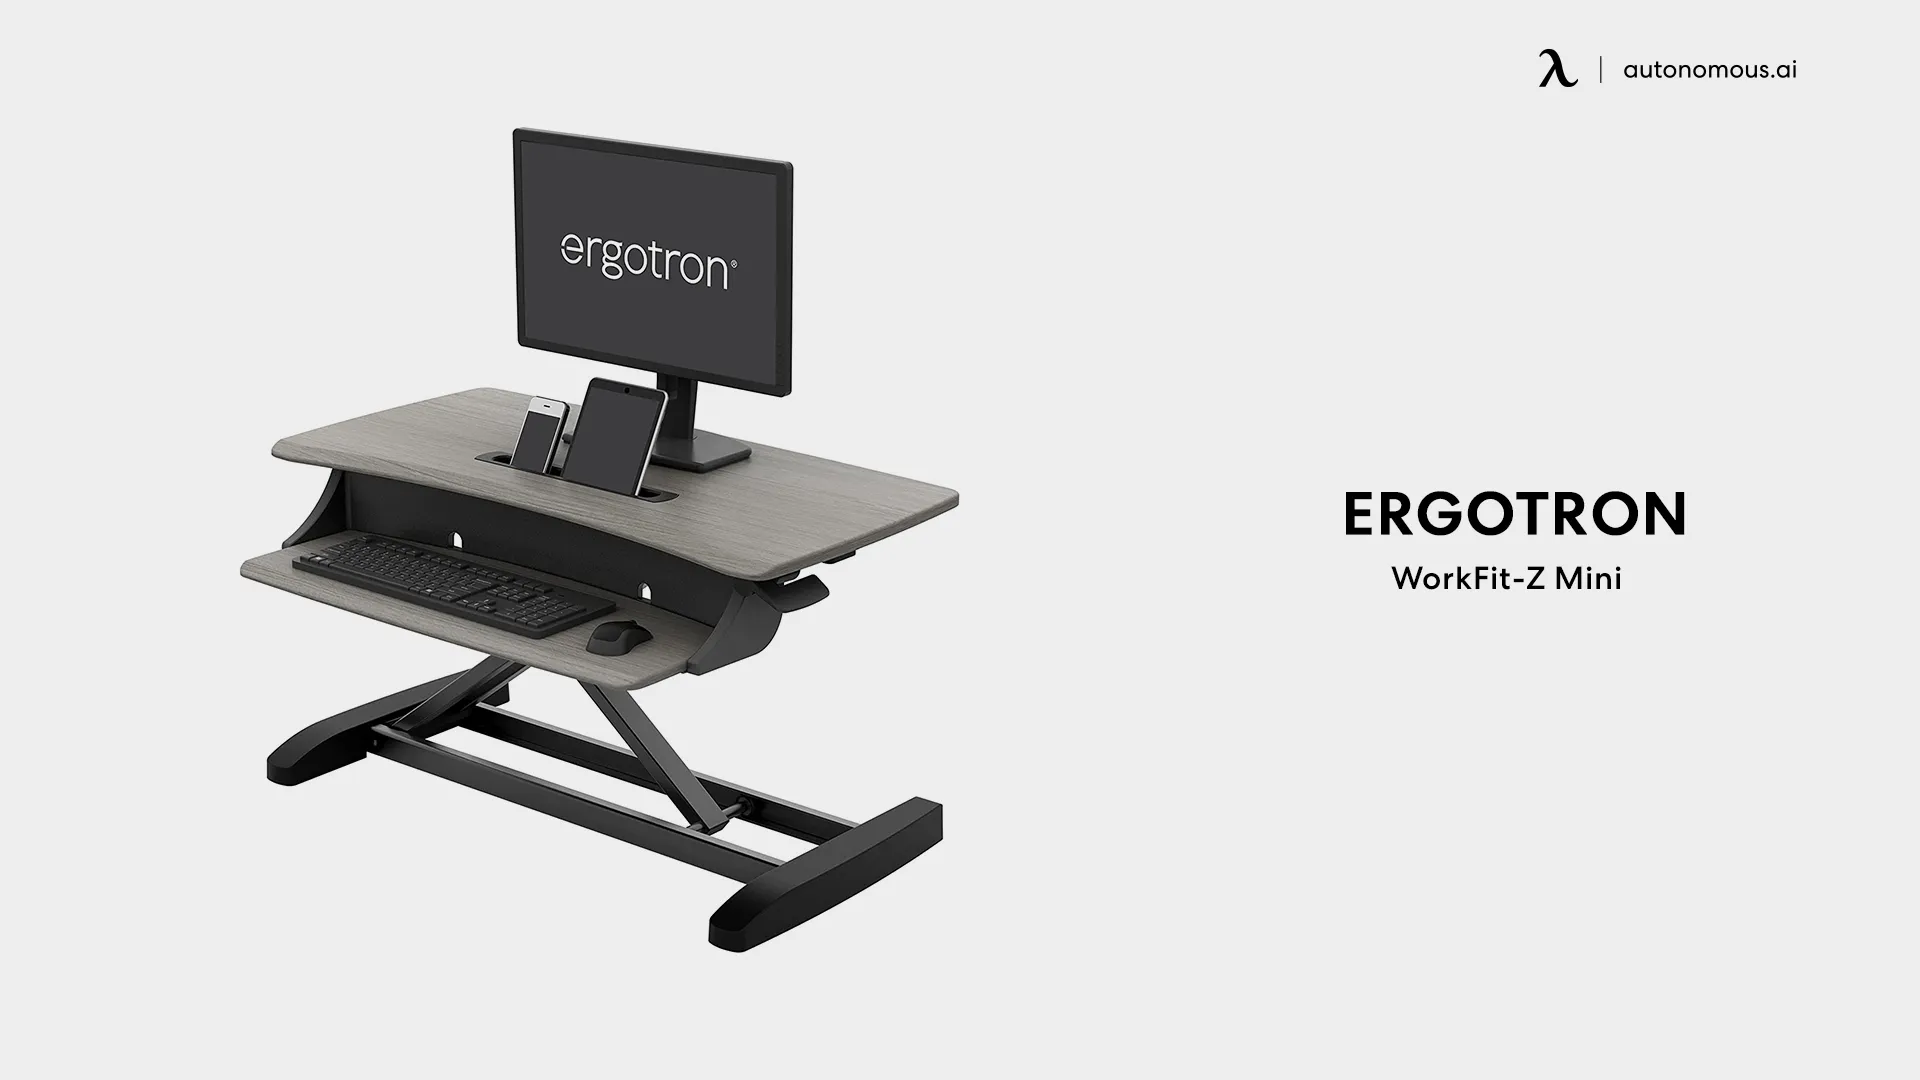 WorkFit-Z Mini by Ergotron portable standing desk converter